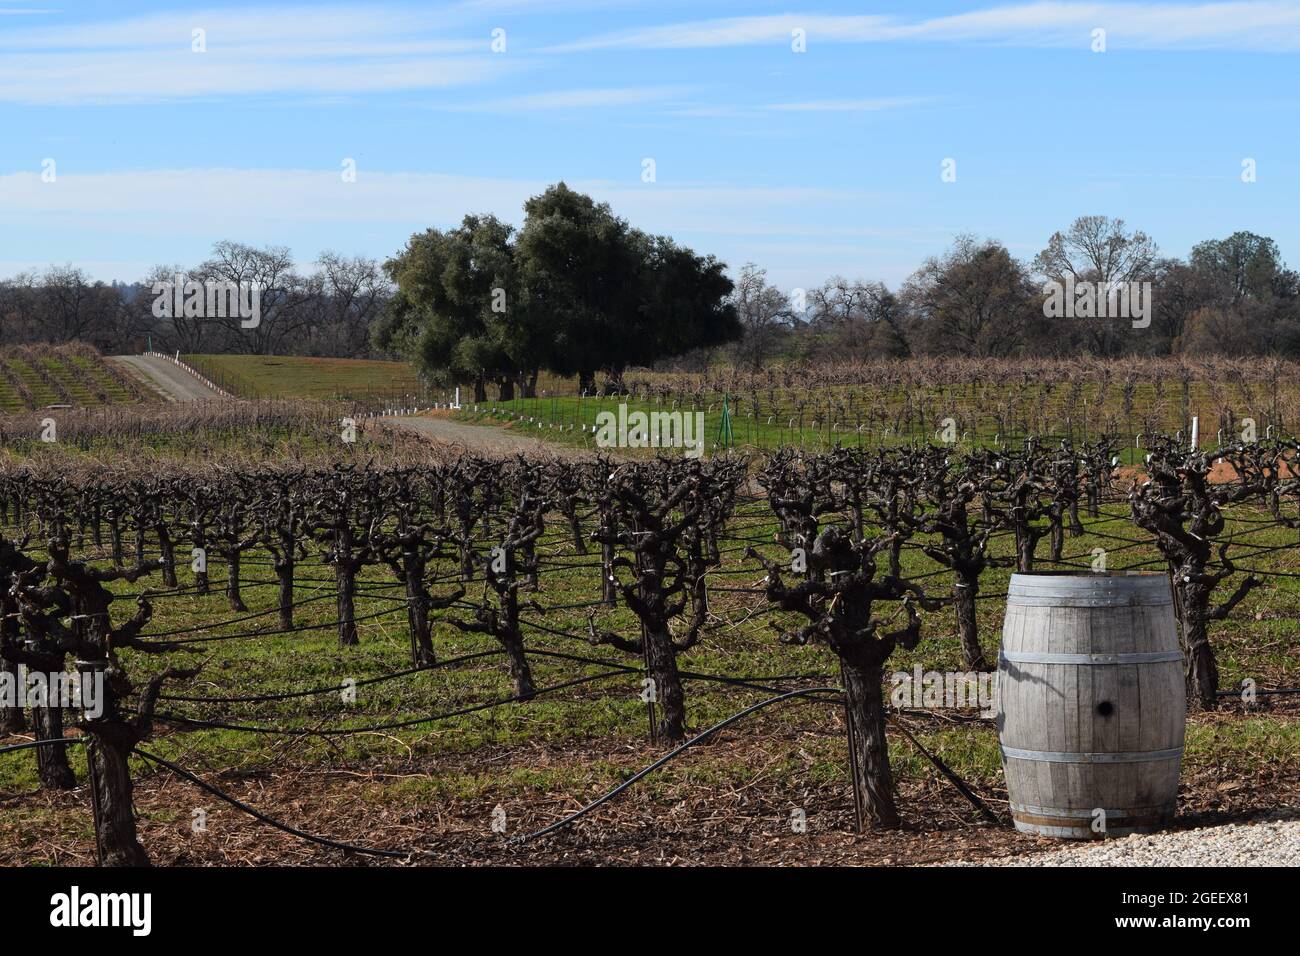 Shenandoah Valley Vineyard, Amador County, California Stock Photo